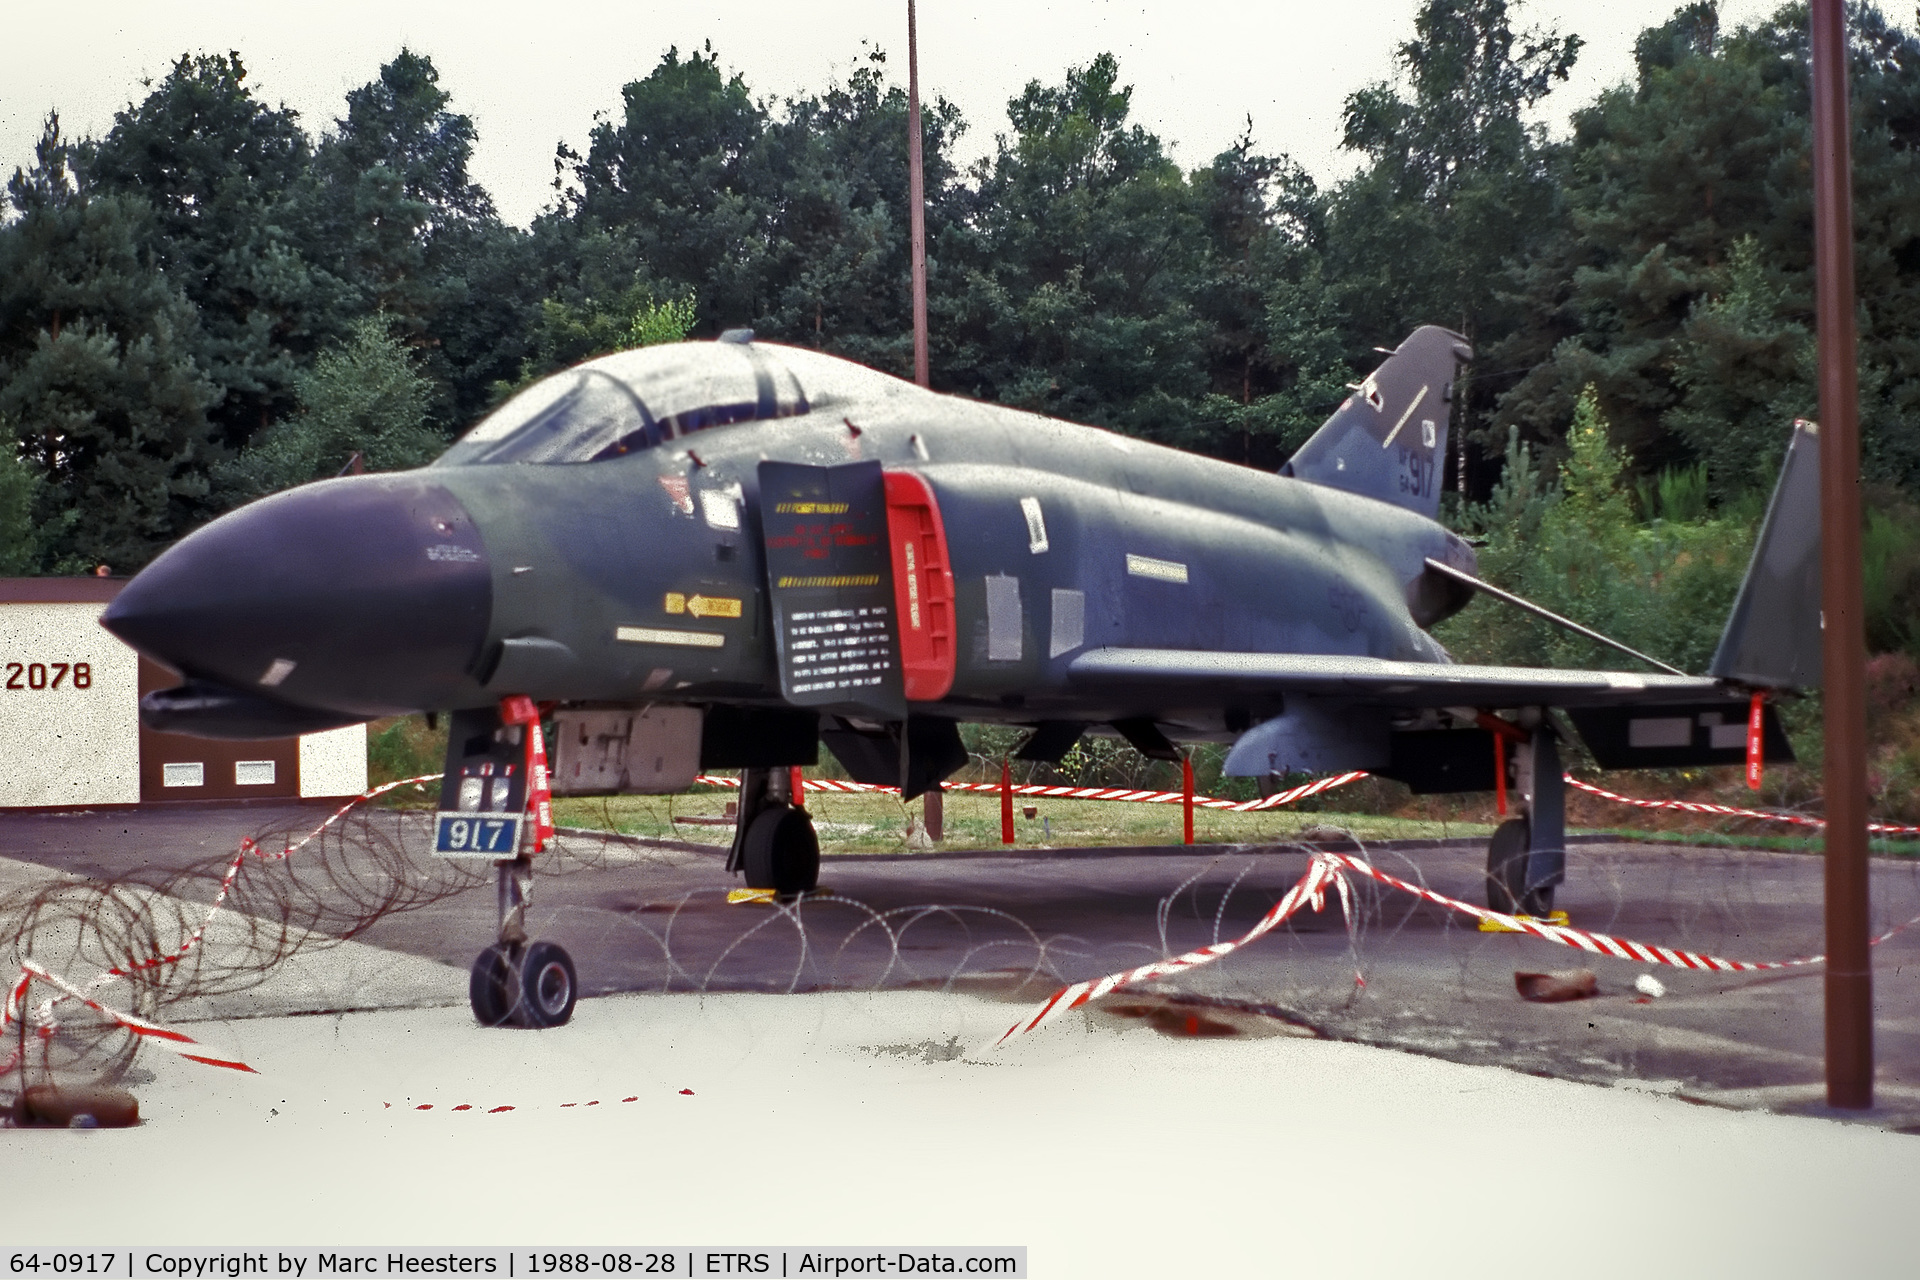 64-0917, 1964 McDonnell F-4C Phantom II C/N 1385, Seen on August 28, 1988 at Ramstein AB.